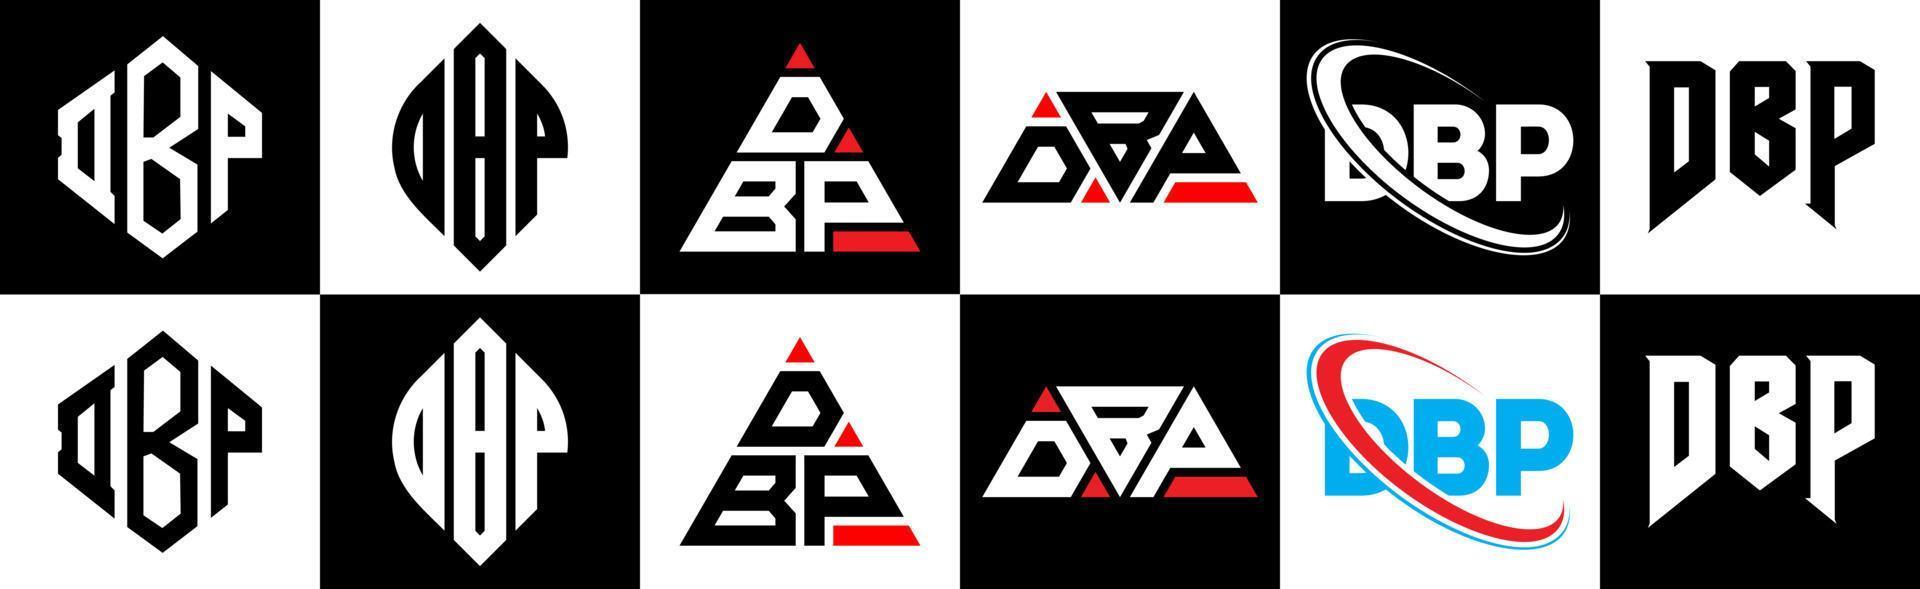 design de logotipo de carta dbp em seis estilo. polígono dbp, círculo, triângulo, hexágono, estilo plano e simples com logotipo de carta de variação de cor preto e branco definido em uma prancheta. dbp logotipo minimalista e clássico vetor